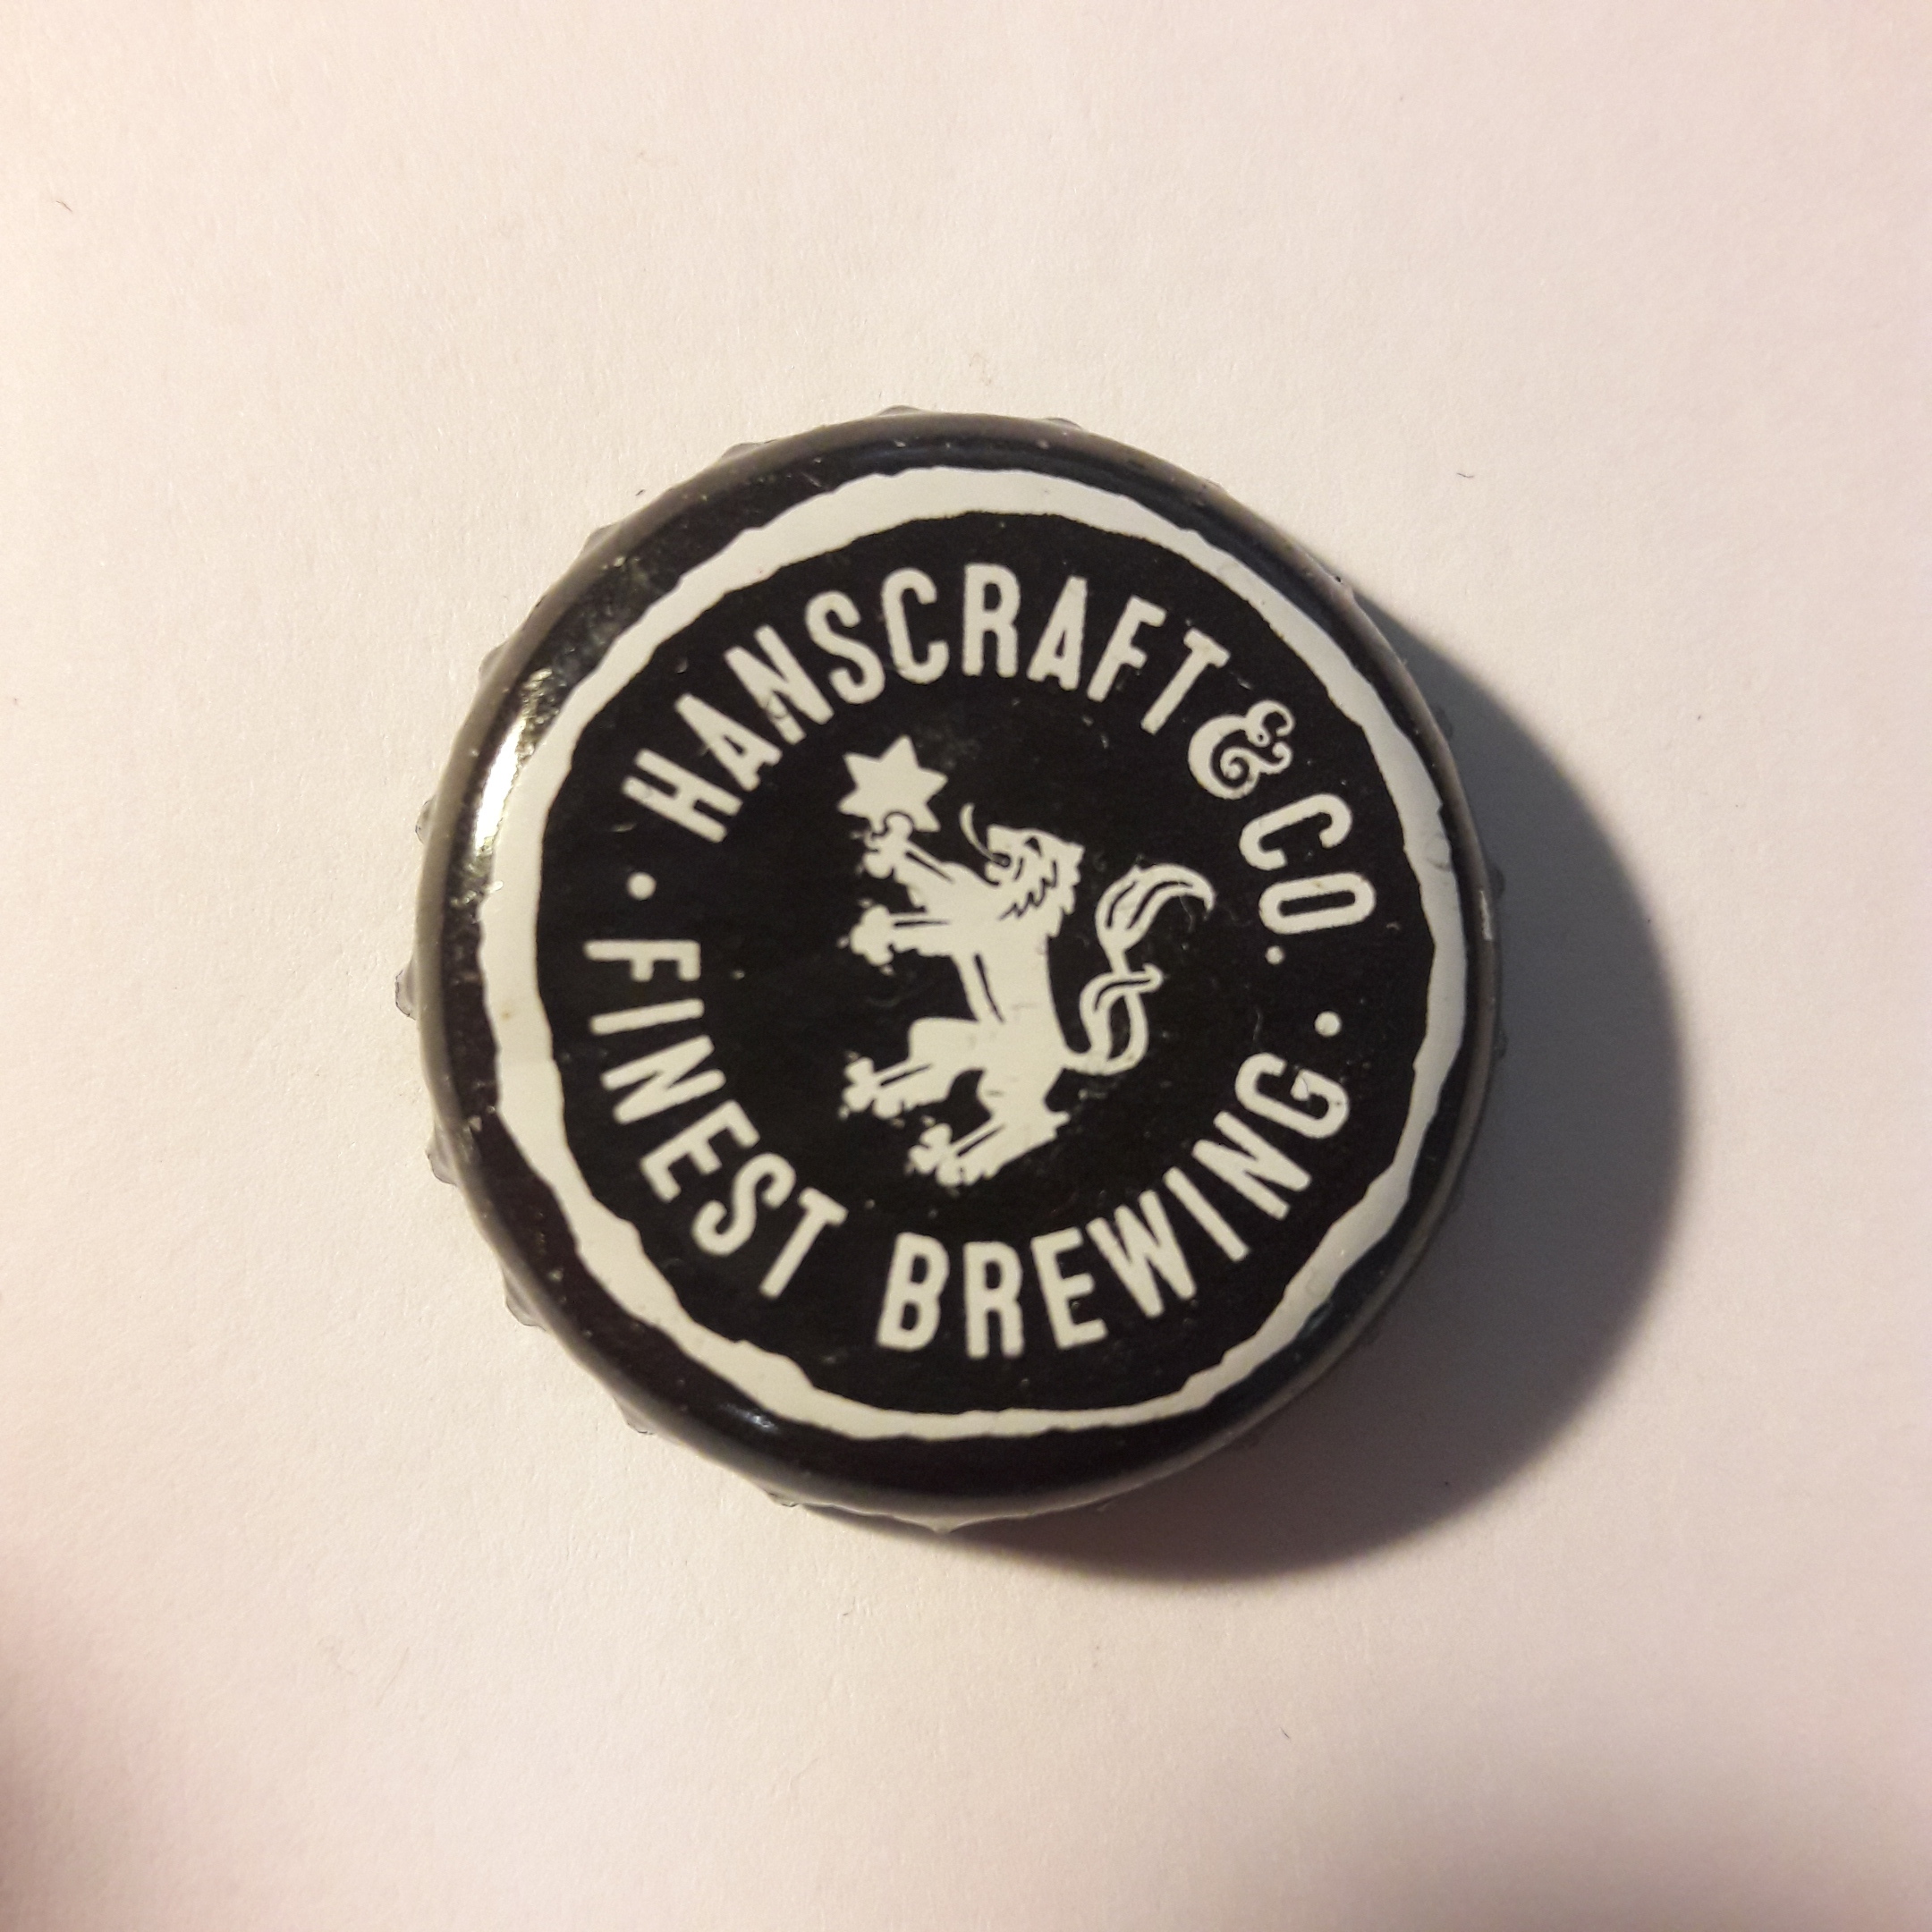 Hanscraft & Co Finest Brewing